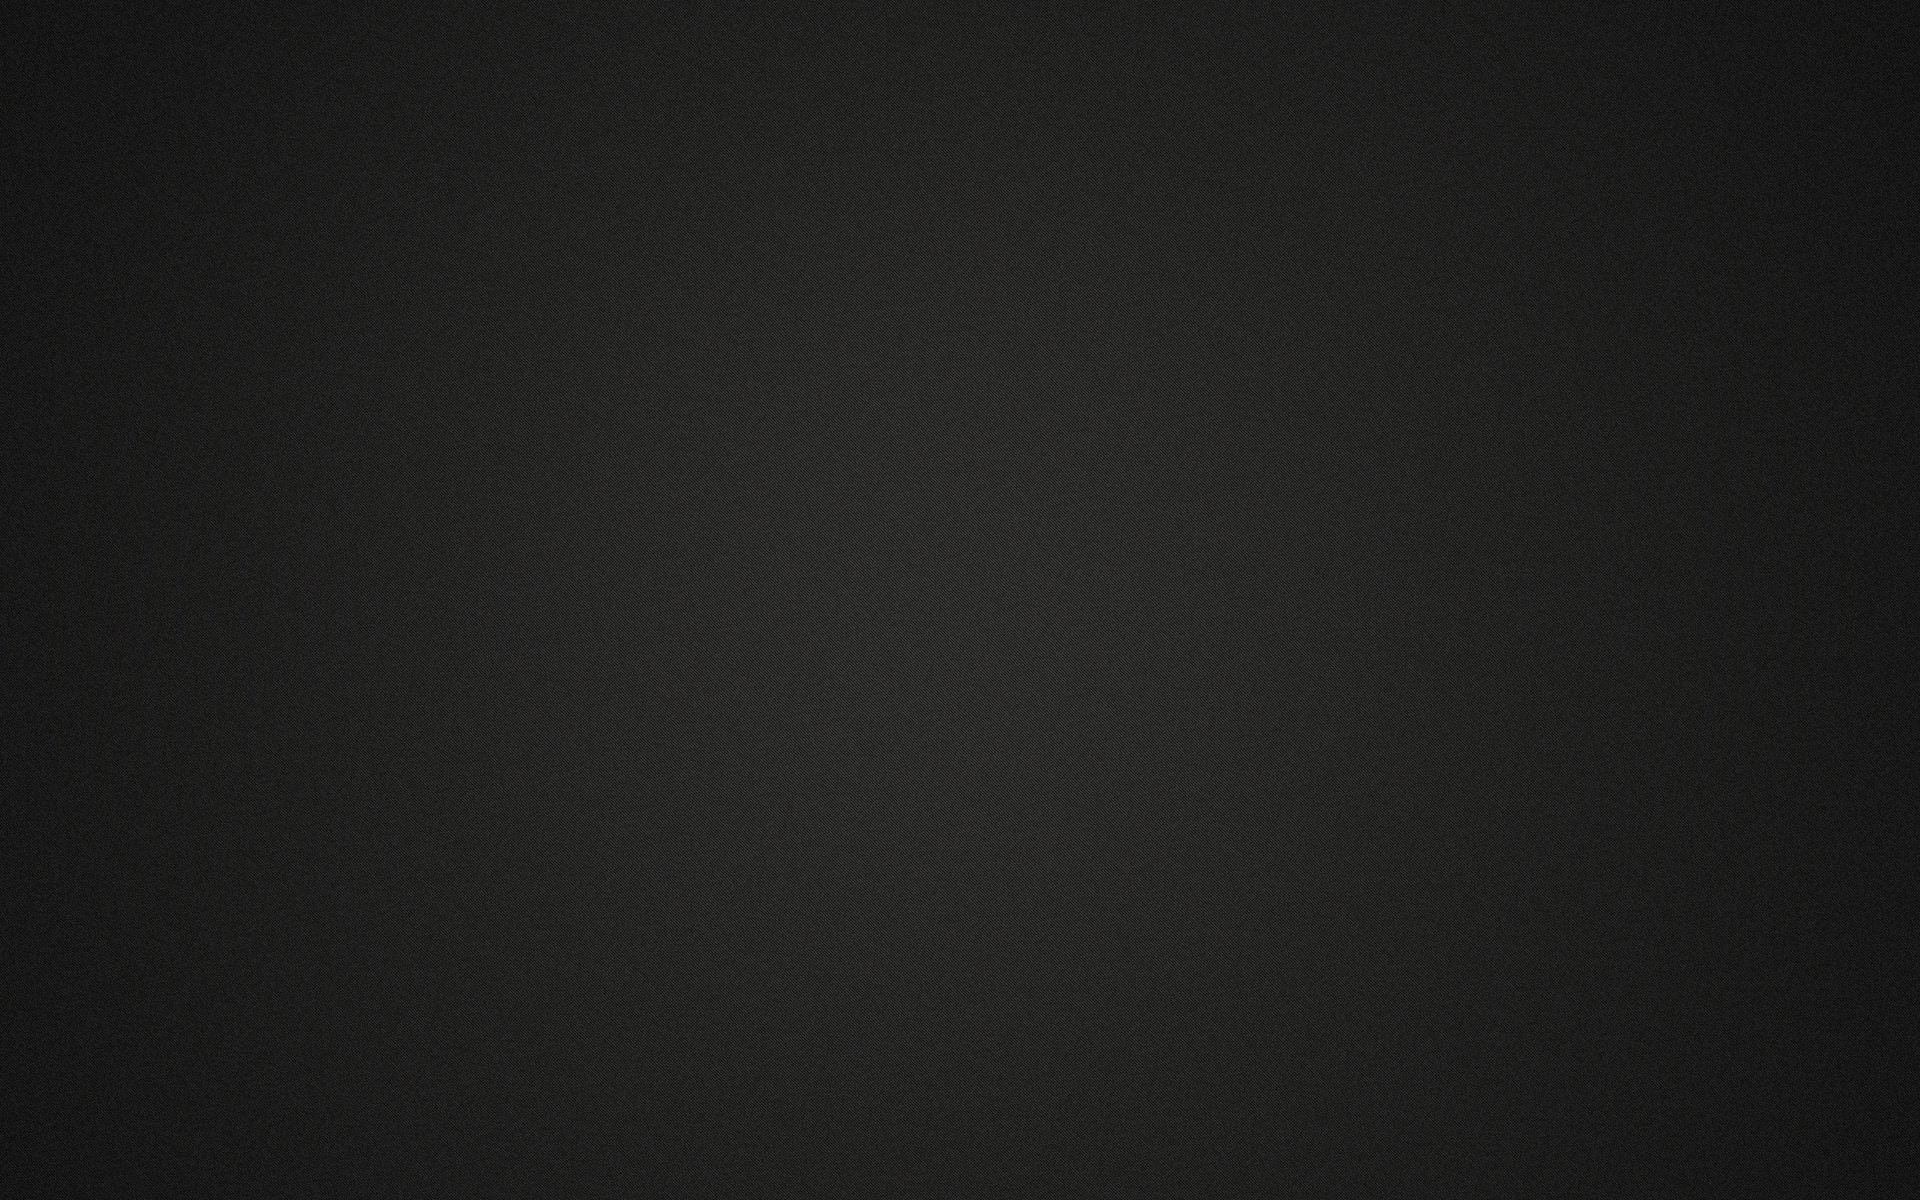 Dark Gray Background ·① Download Free Wallpapers For Desktop Mobile